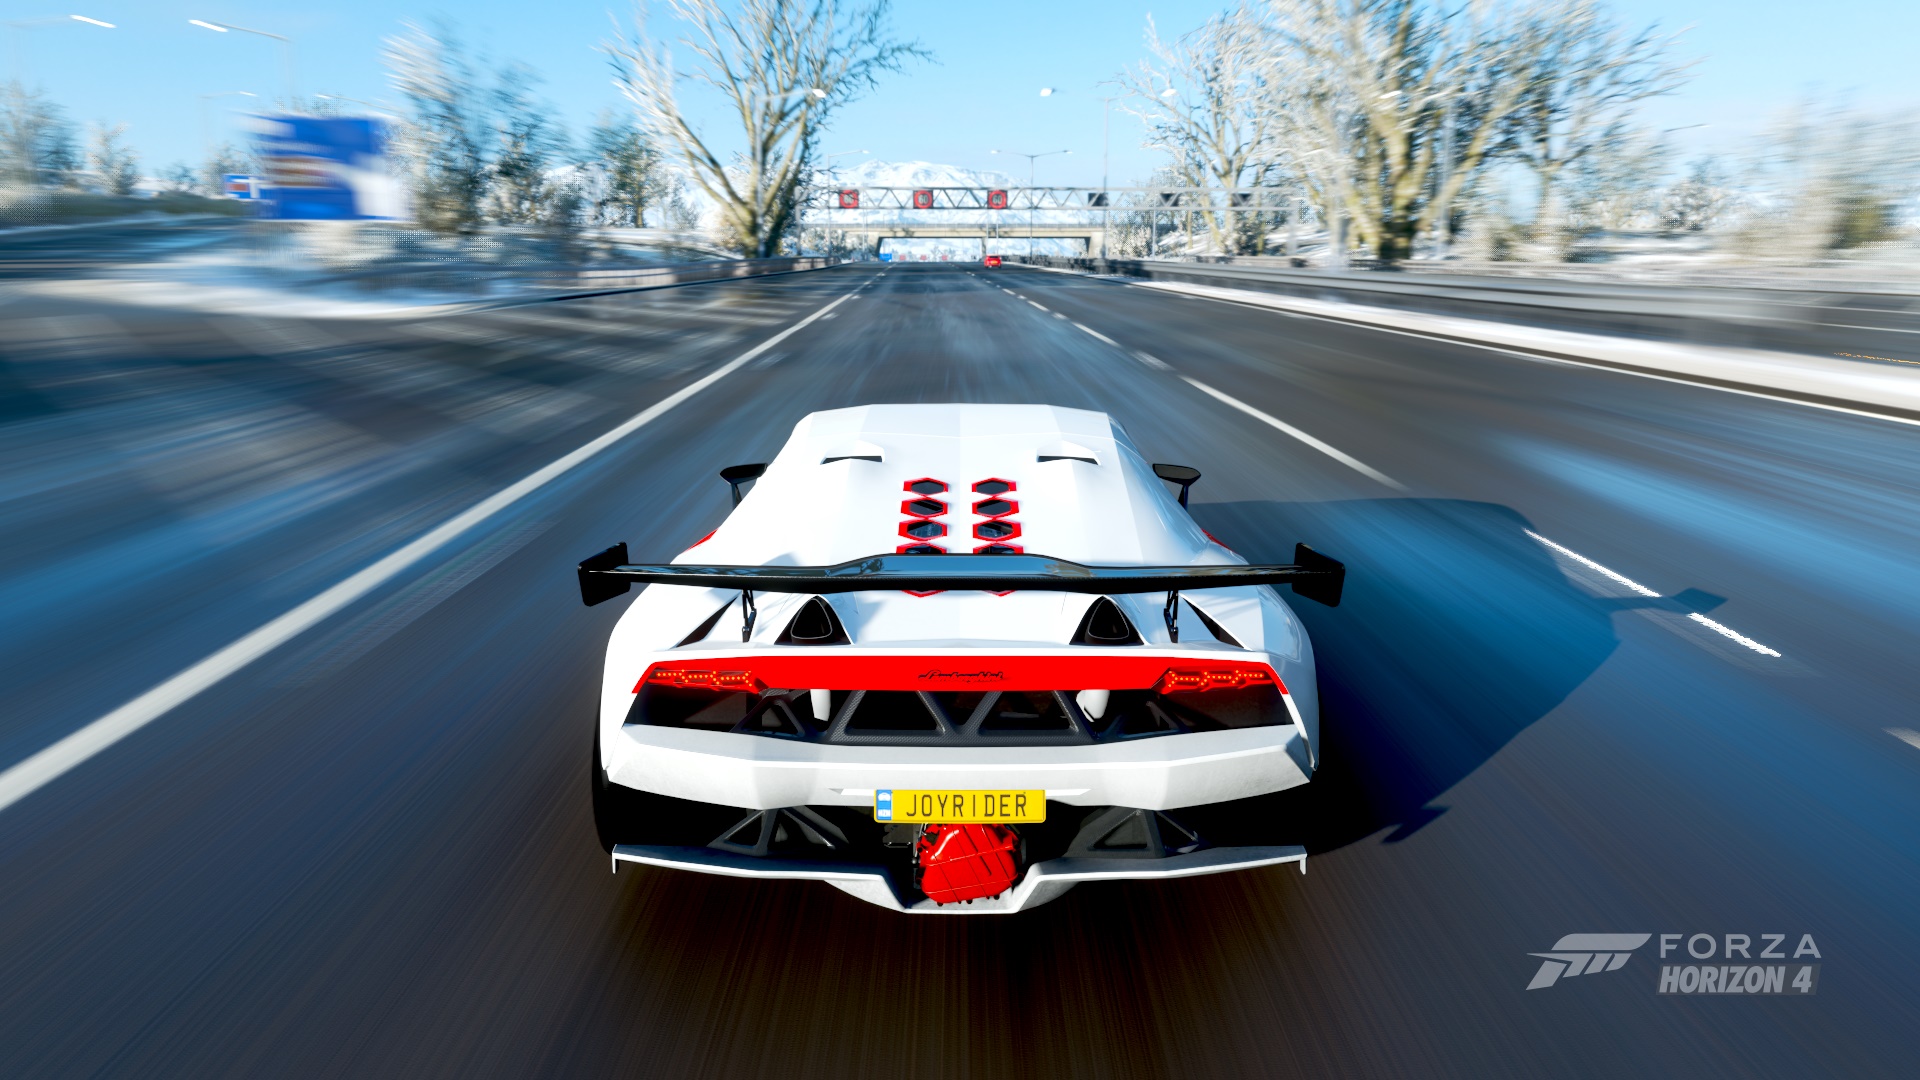 General 1920x1080 Forza Horizon 4 car video games road screen shot